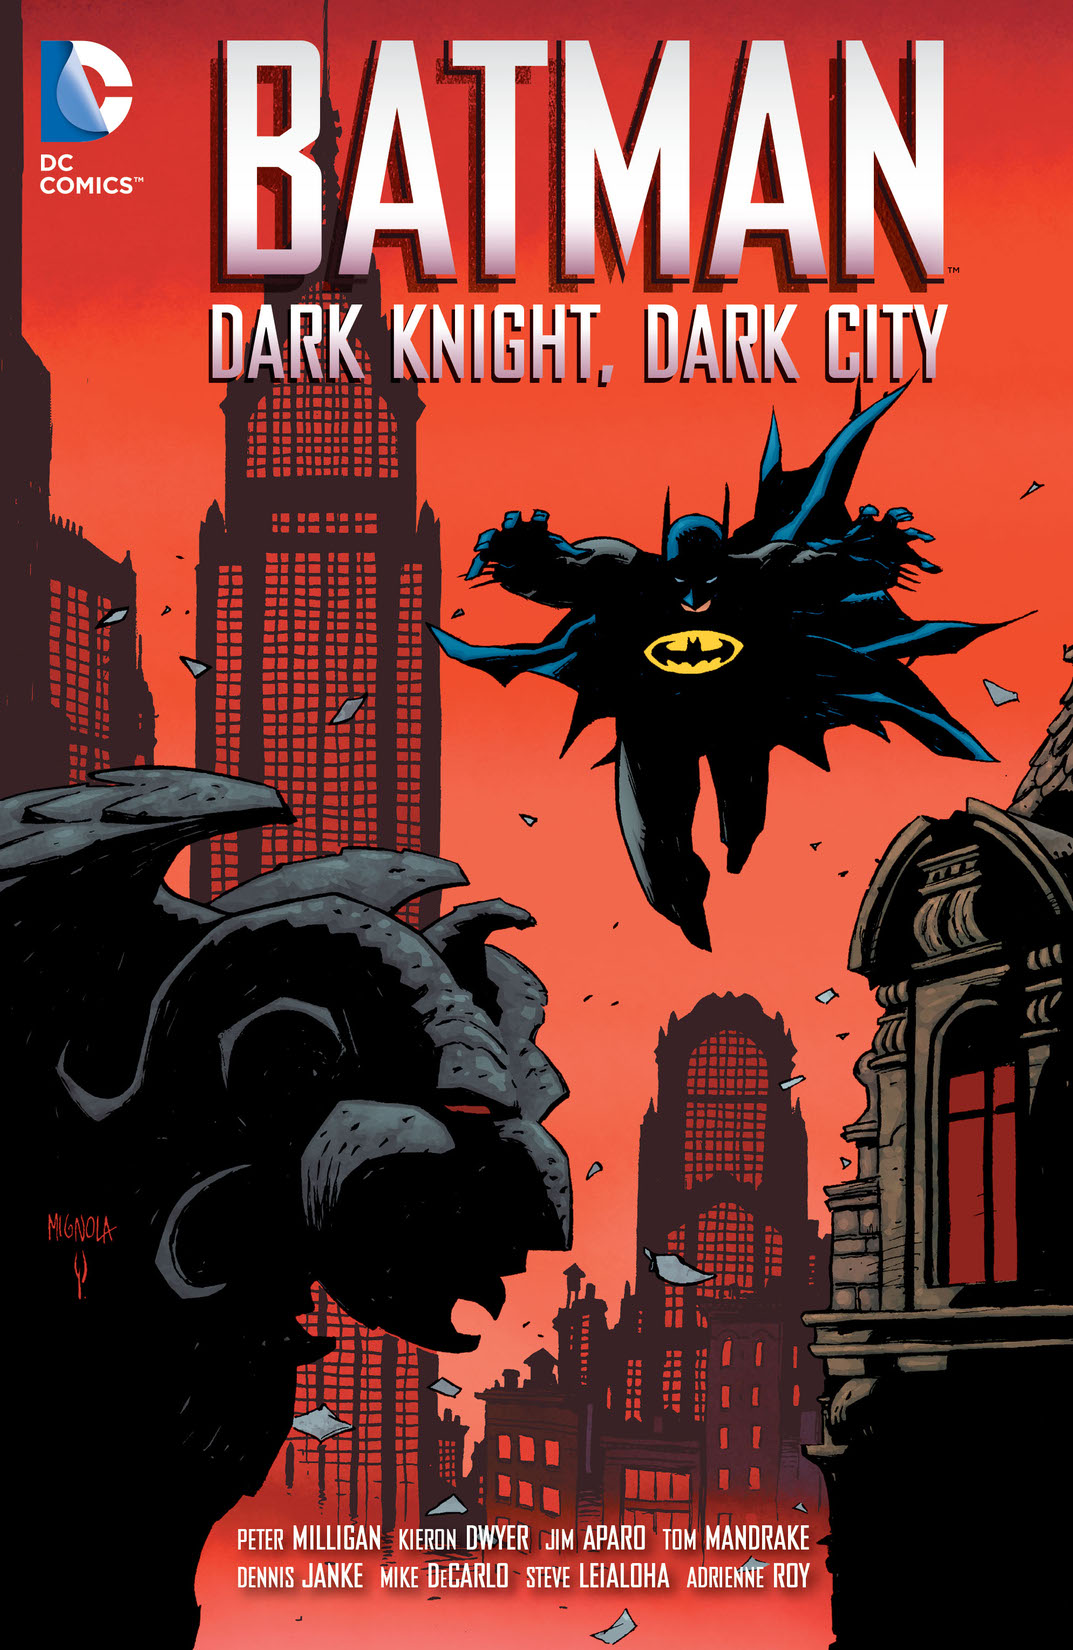 Batman: Dark Night, Dark City preview images